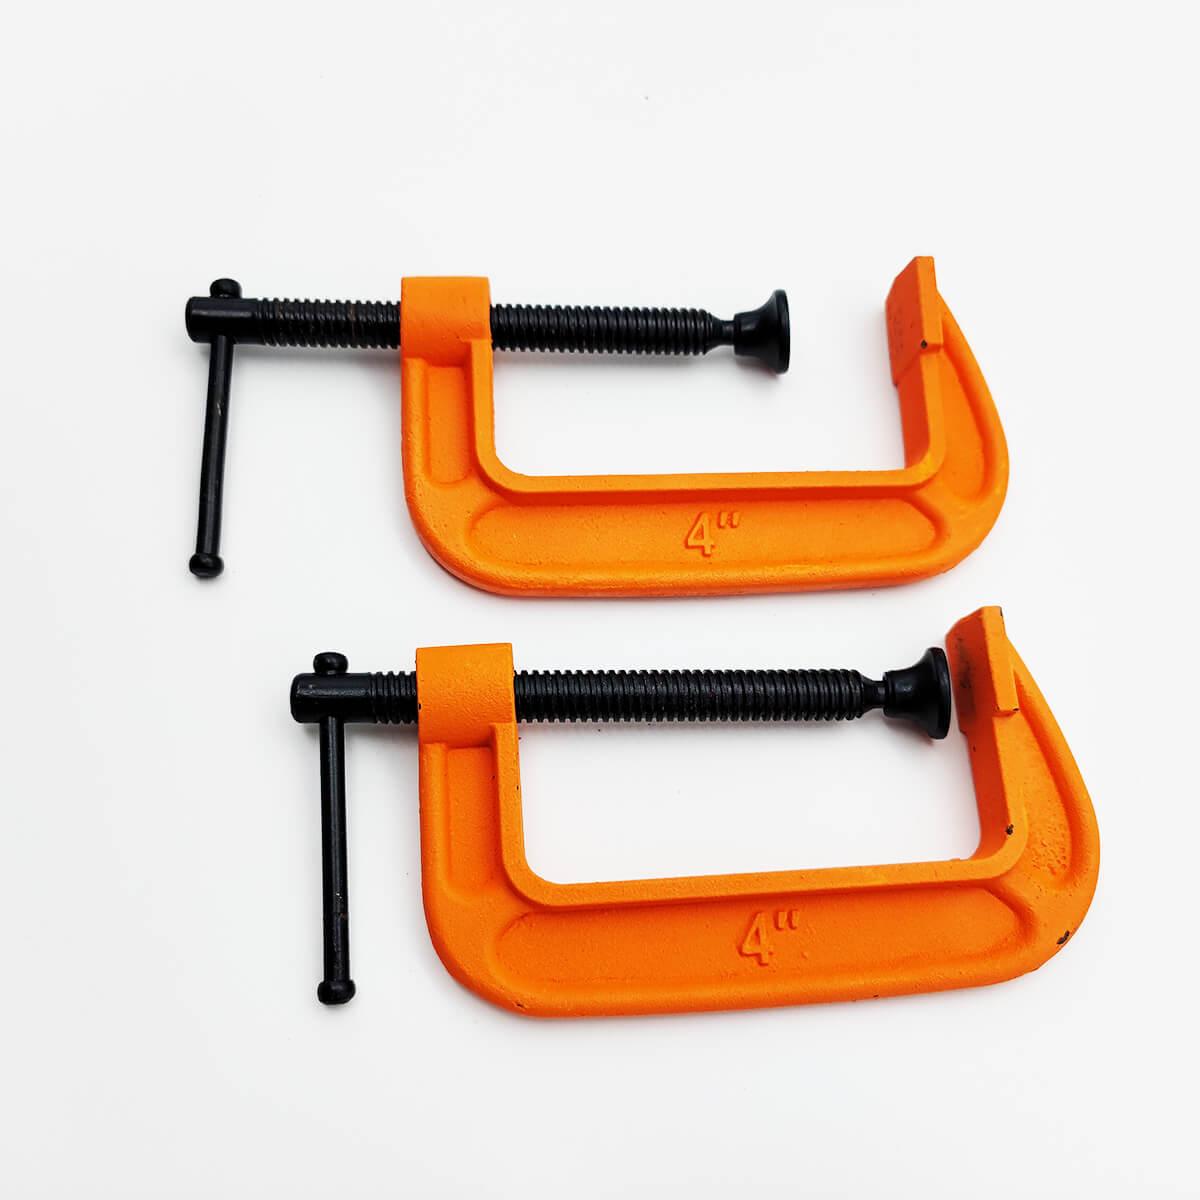 4 Inch G Clamps for Rug Tufting Frame | LetsTuft